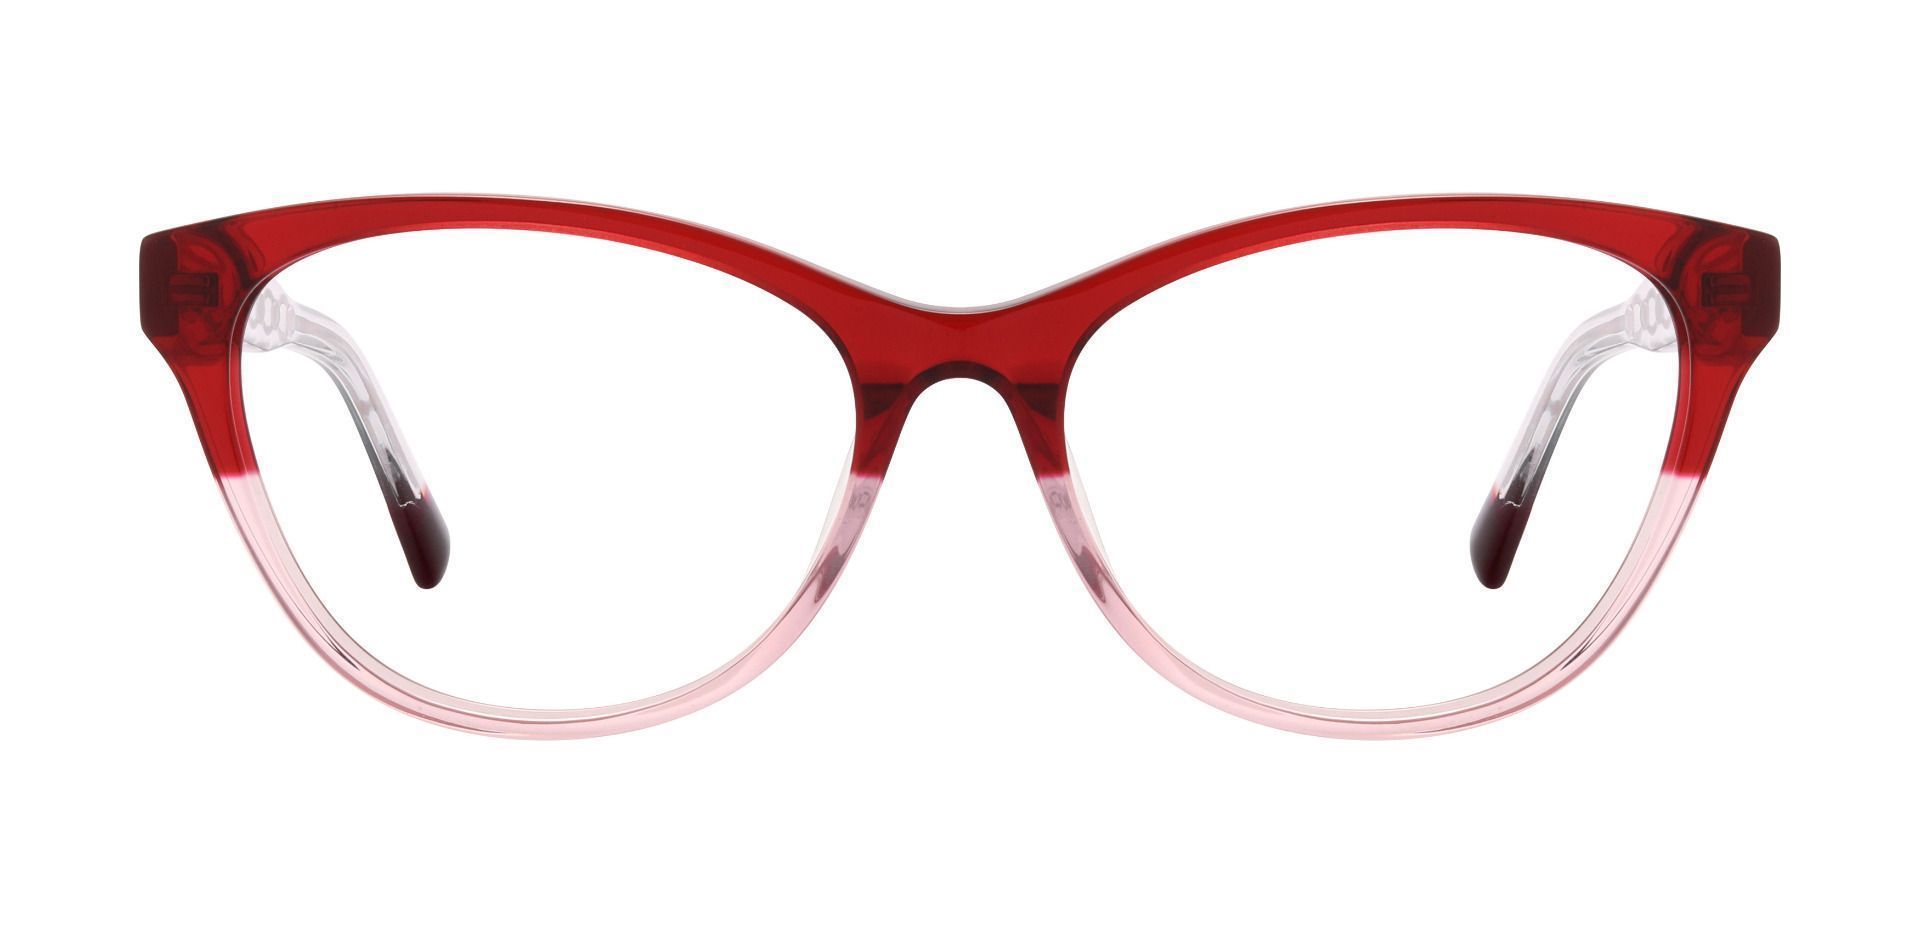 Knoxville Cat Eye Prescription Glasses - Red